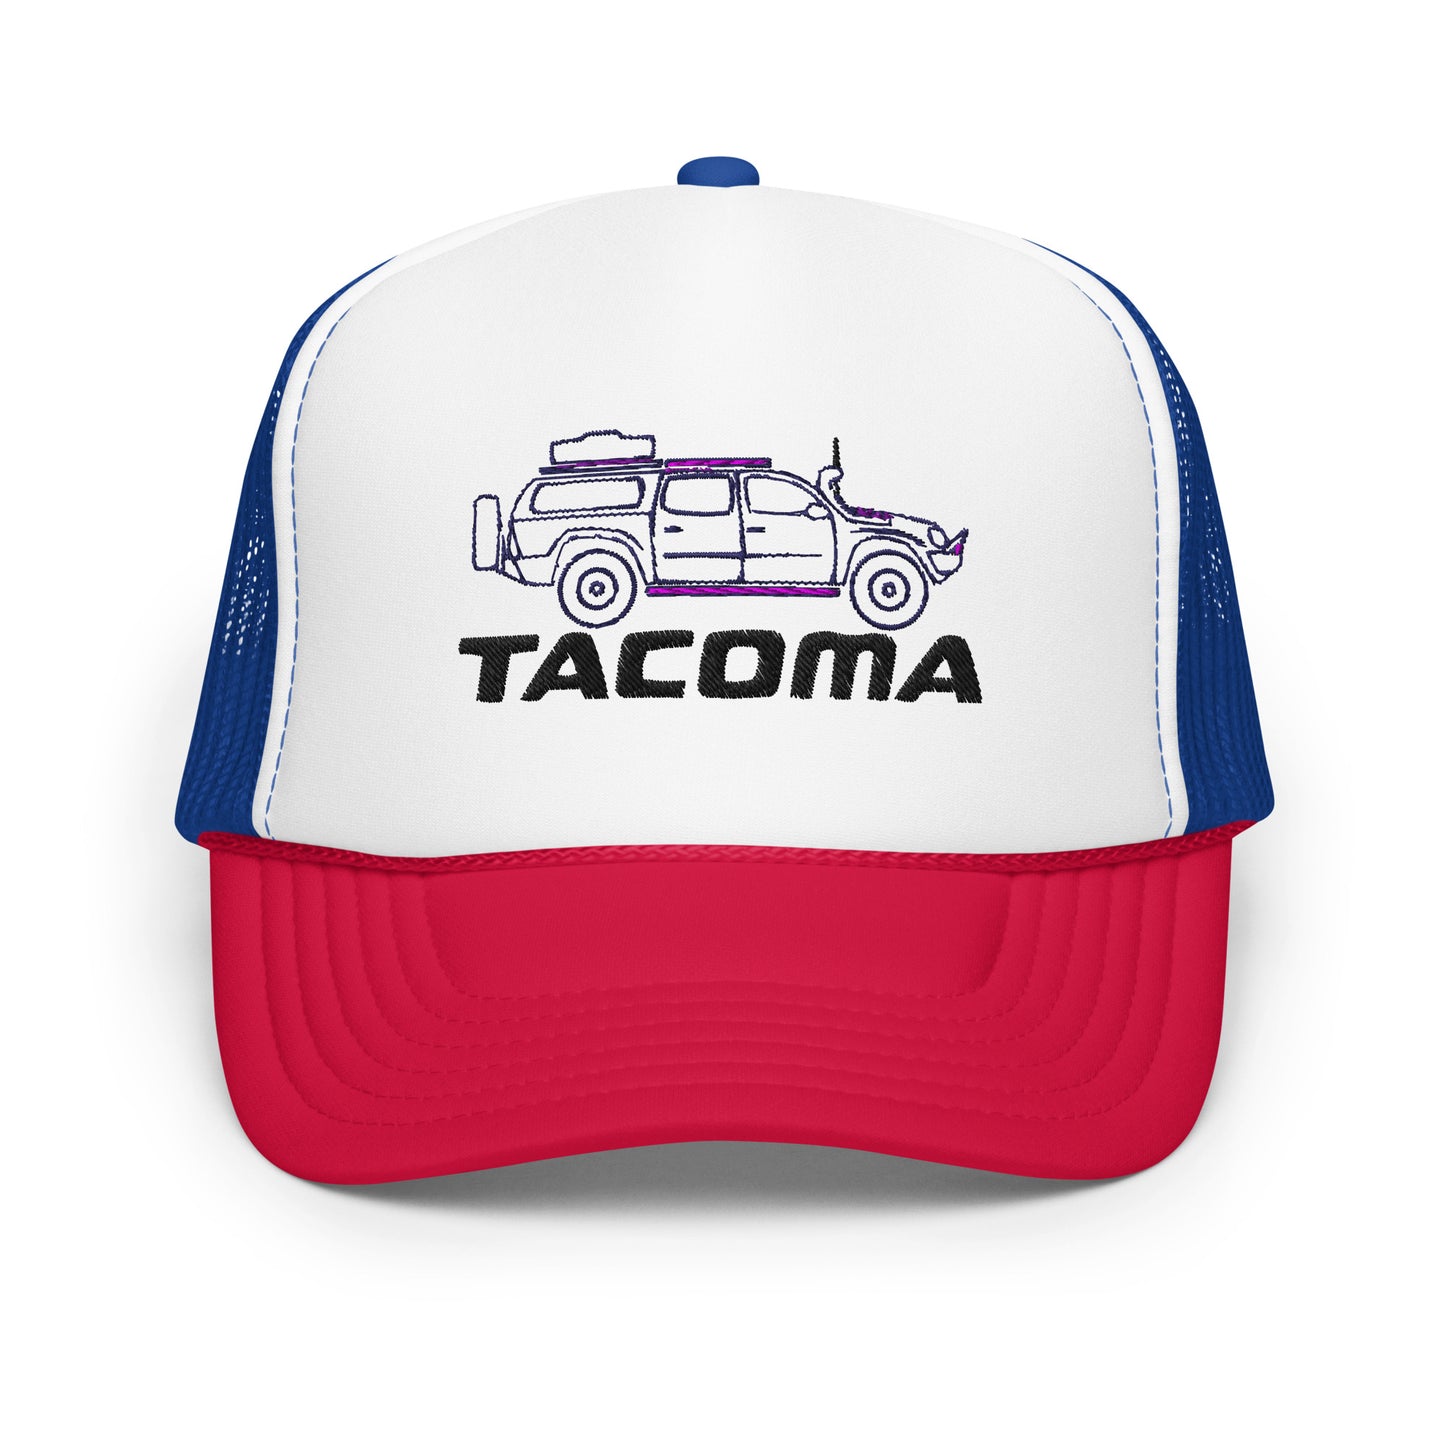 Tacoma Foam Trucker Hat.